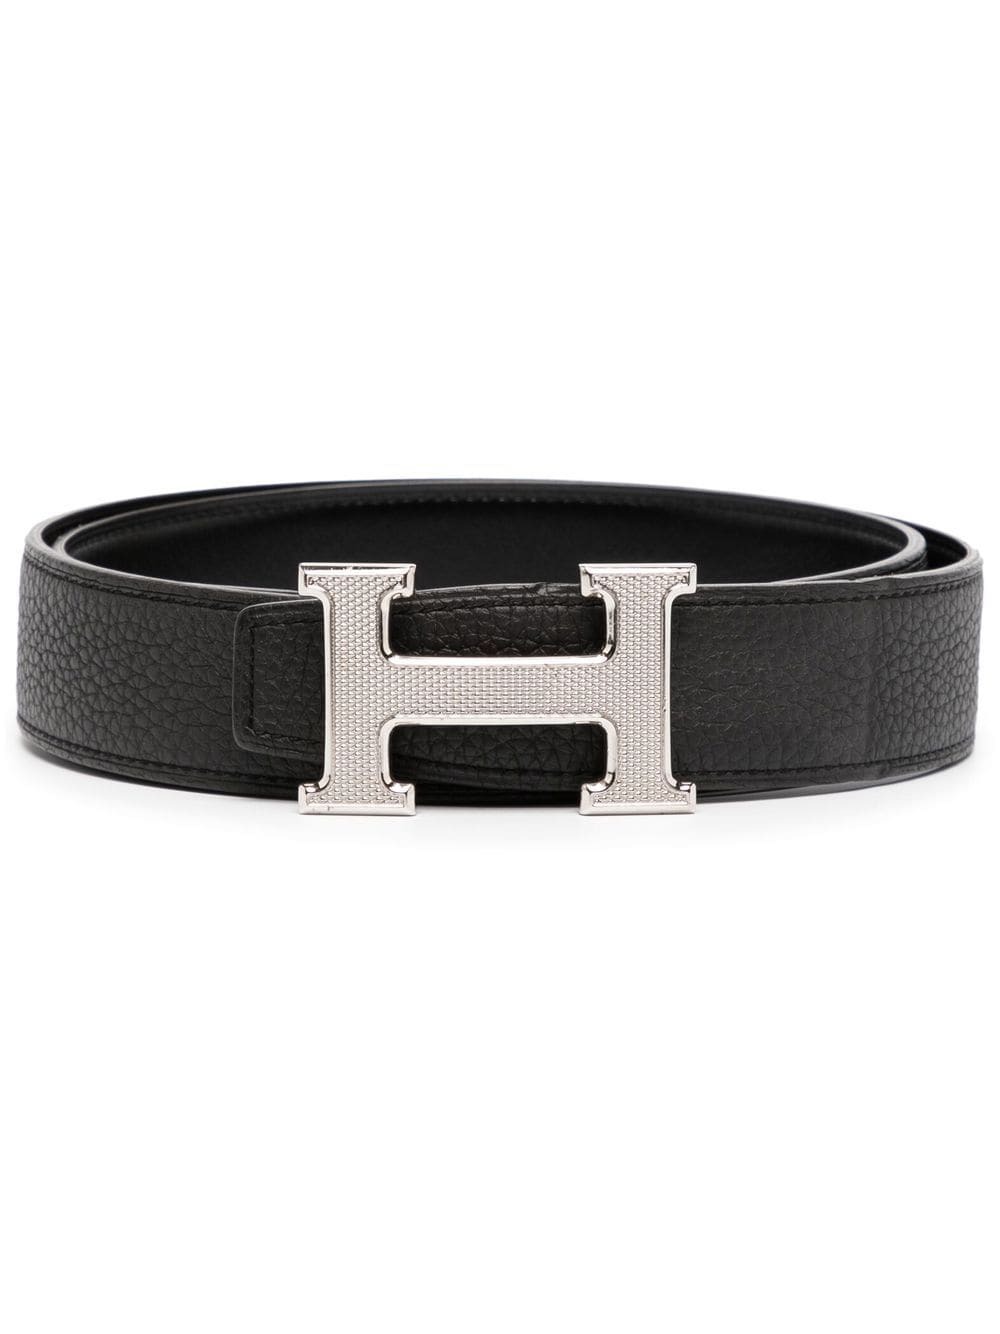 Hermès 2019 pre-owned Constance buckle belt - Black